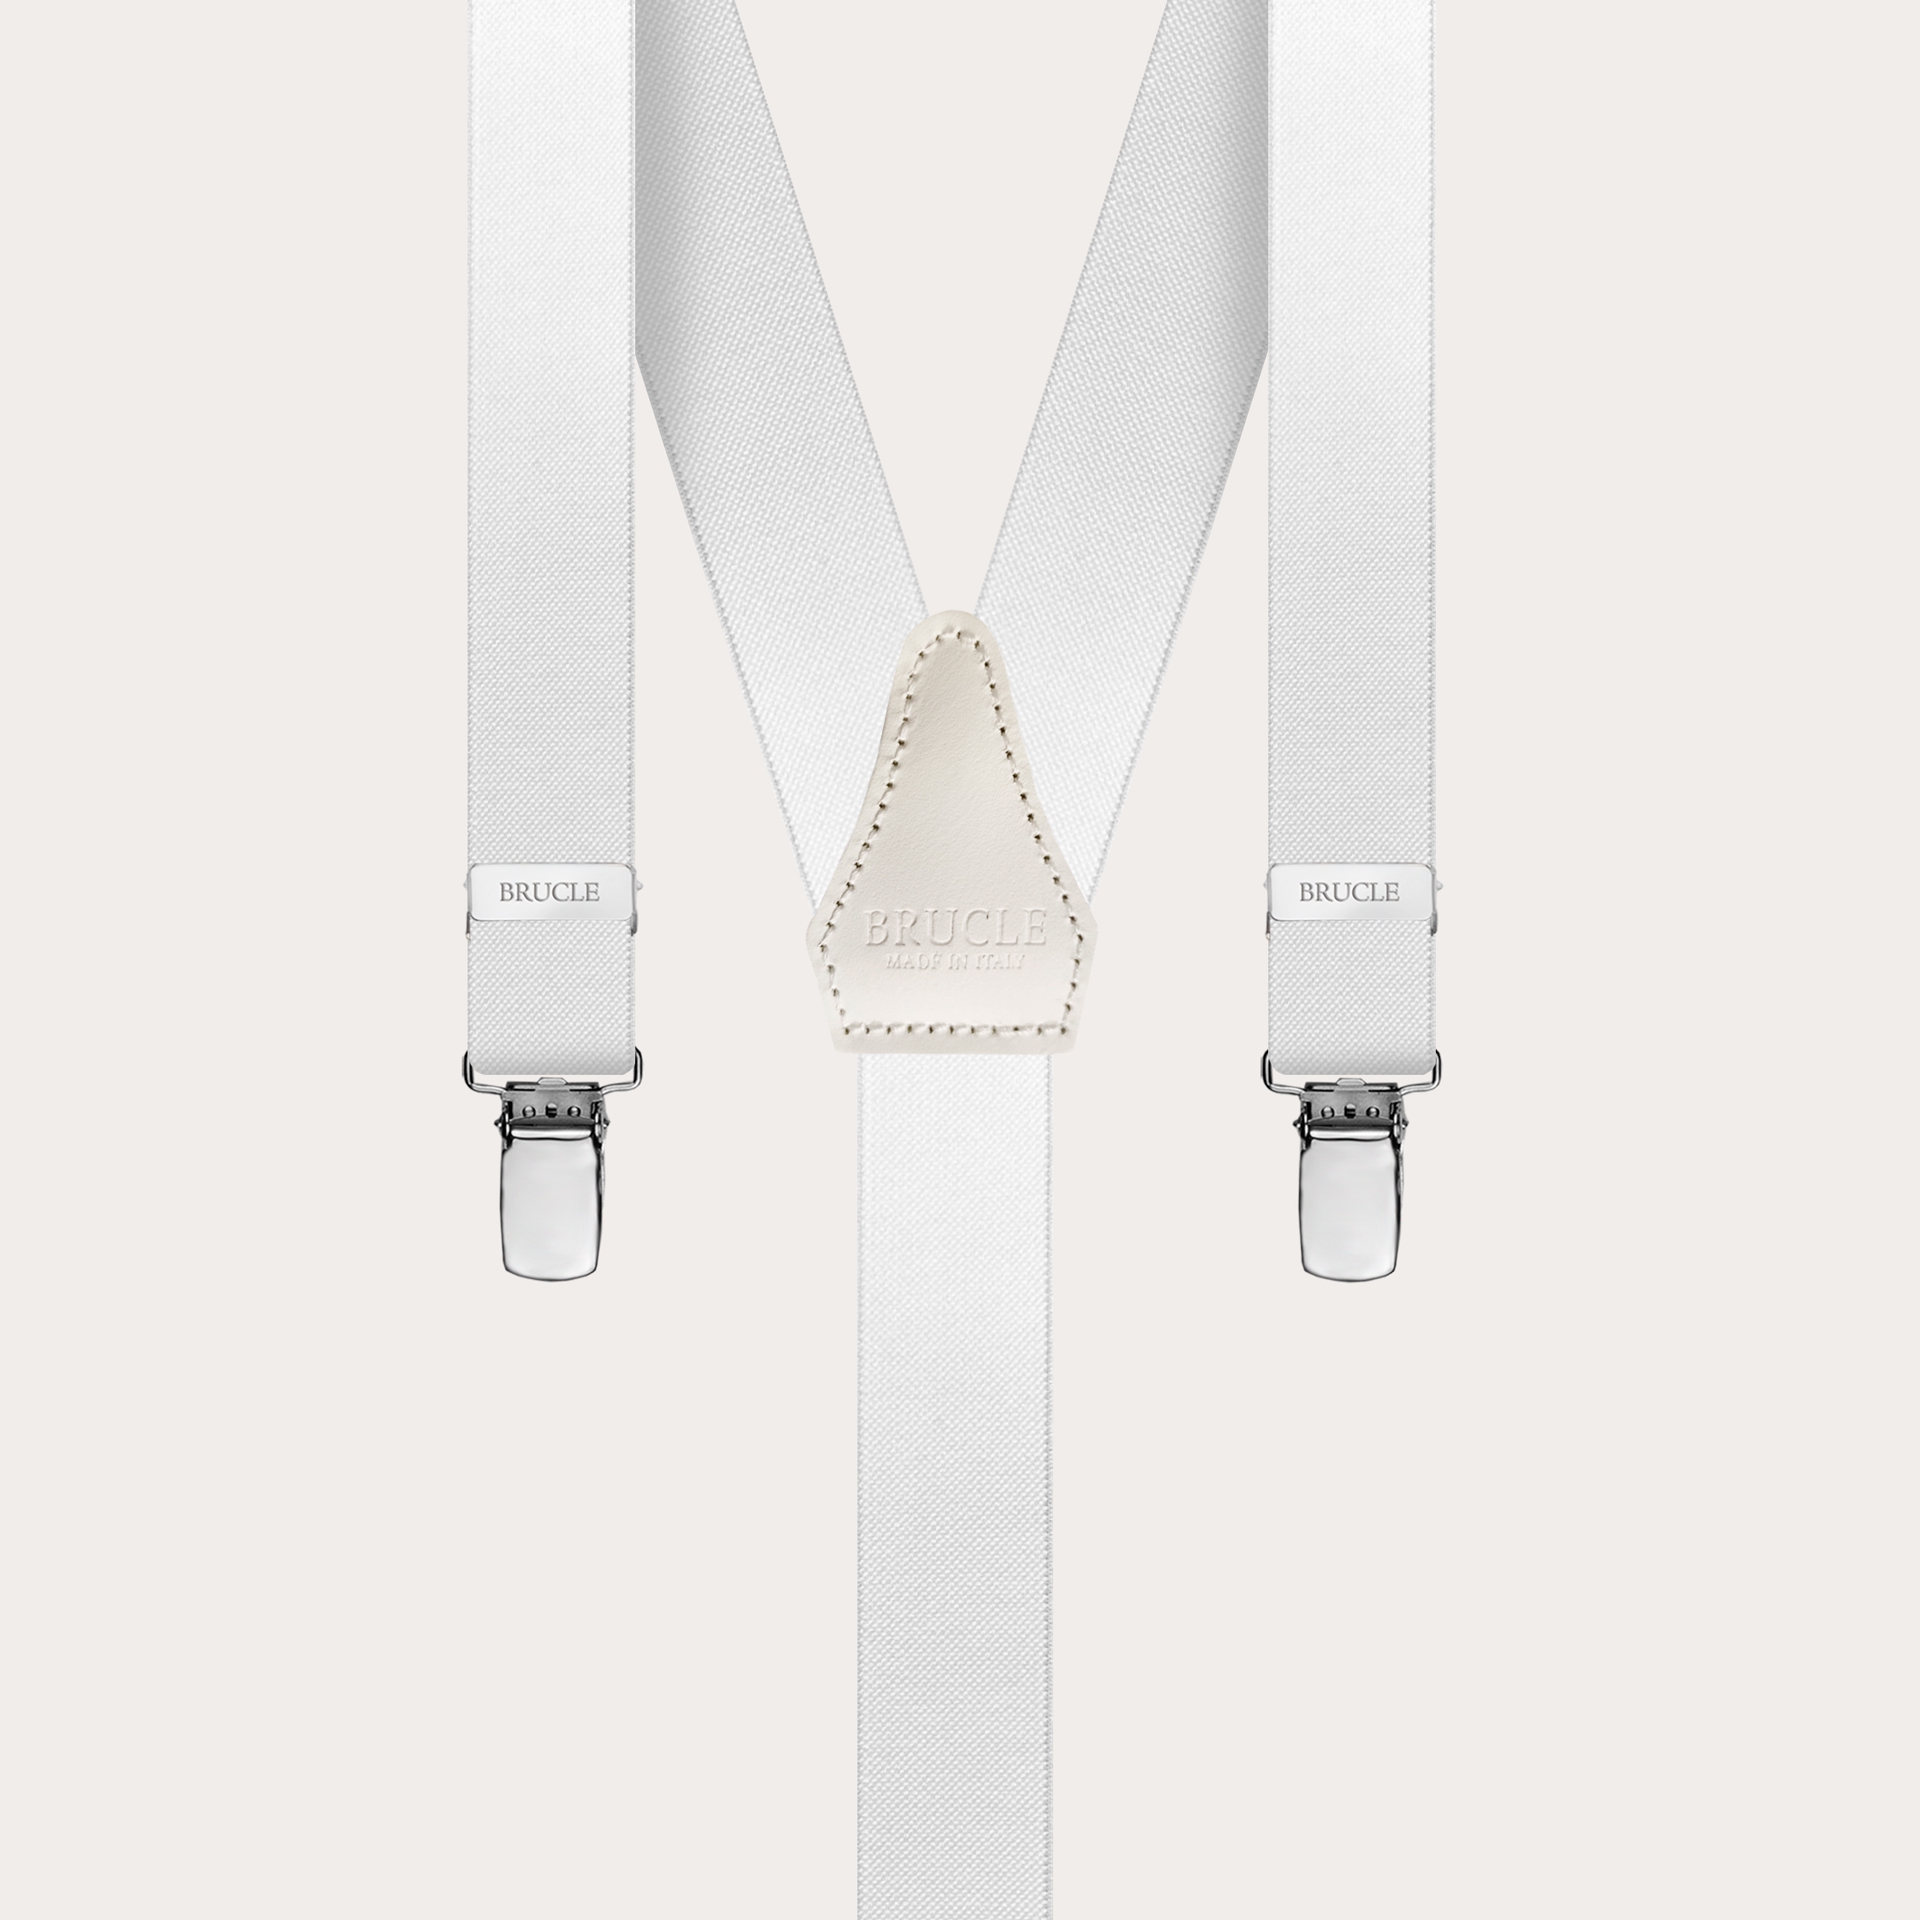 Clip-on Braces Elastic Y Suspenders white